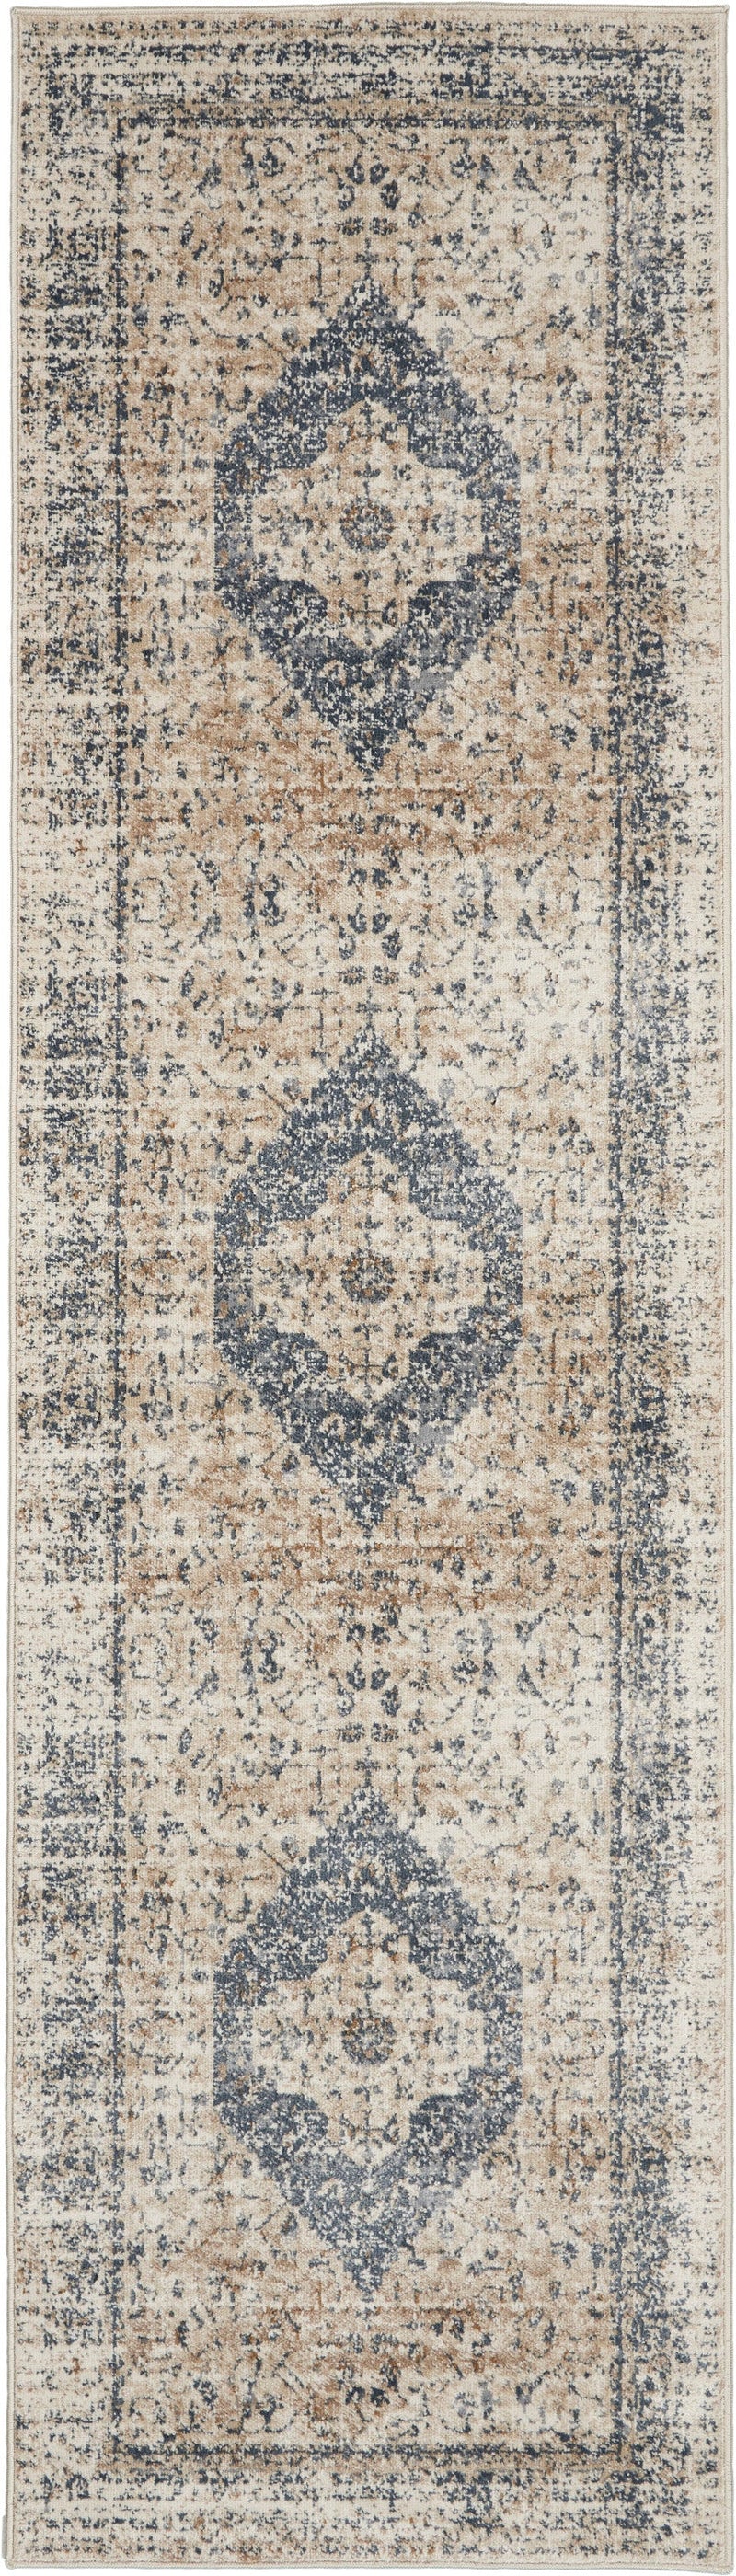 media image for malta ivory blue rug by nourison 99446494948 redo 2 239